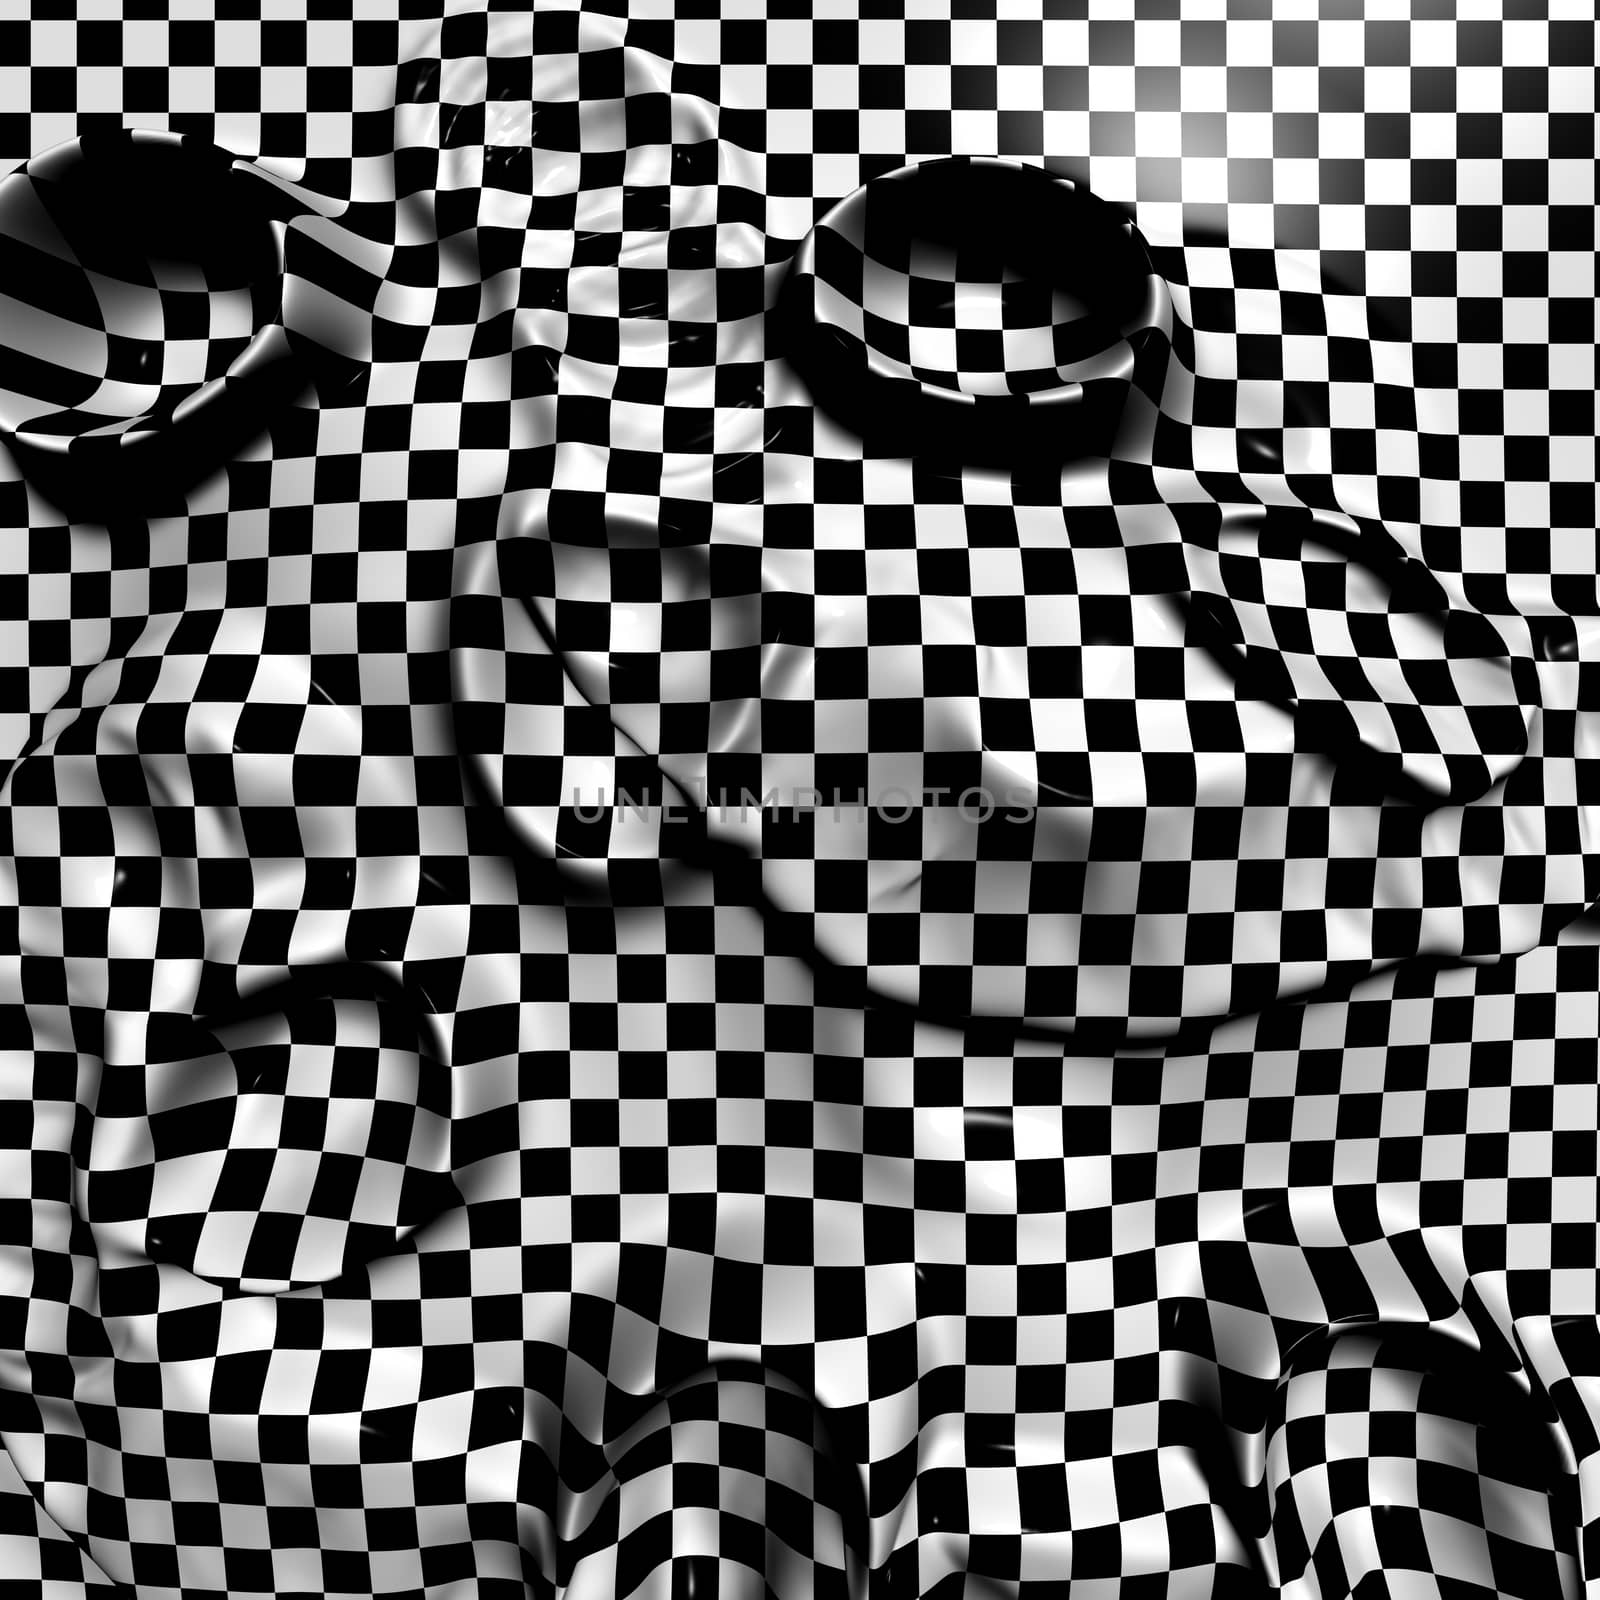 checkered texture by vitanovski